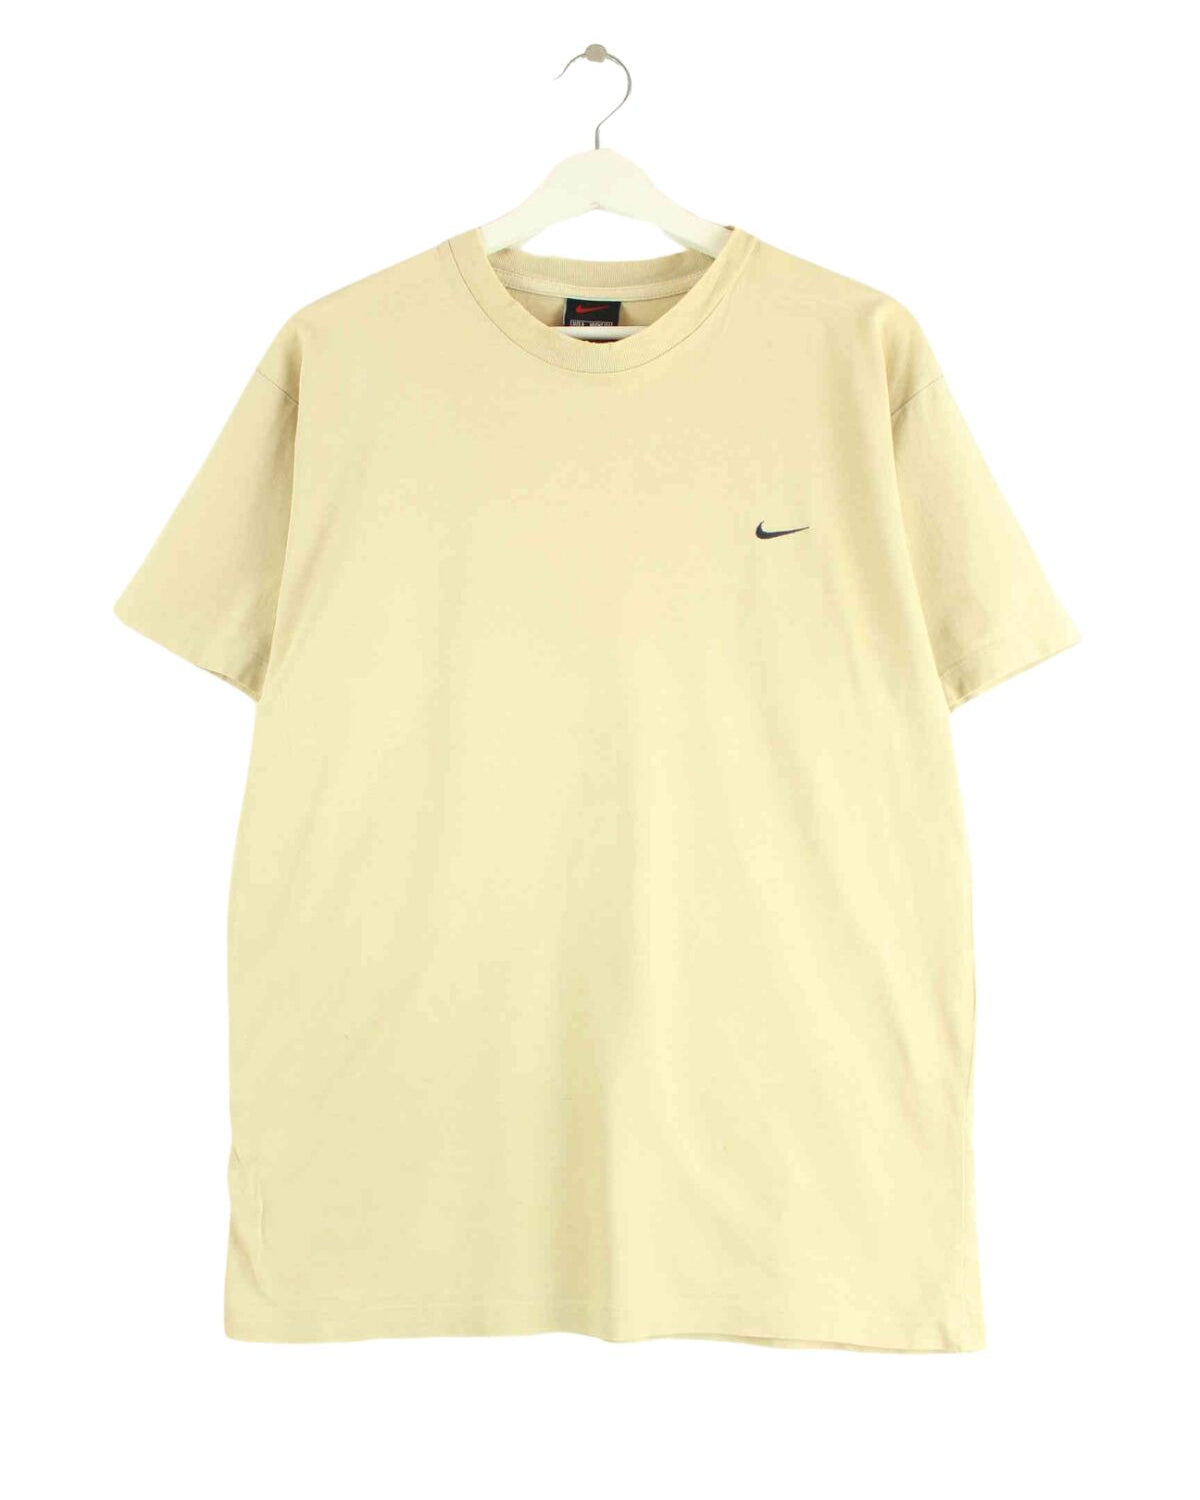 Nike 90s Vintage Basic Swoosh T-Shirt Beige S (front image)